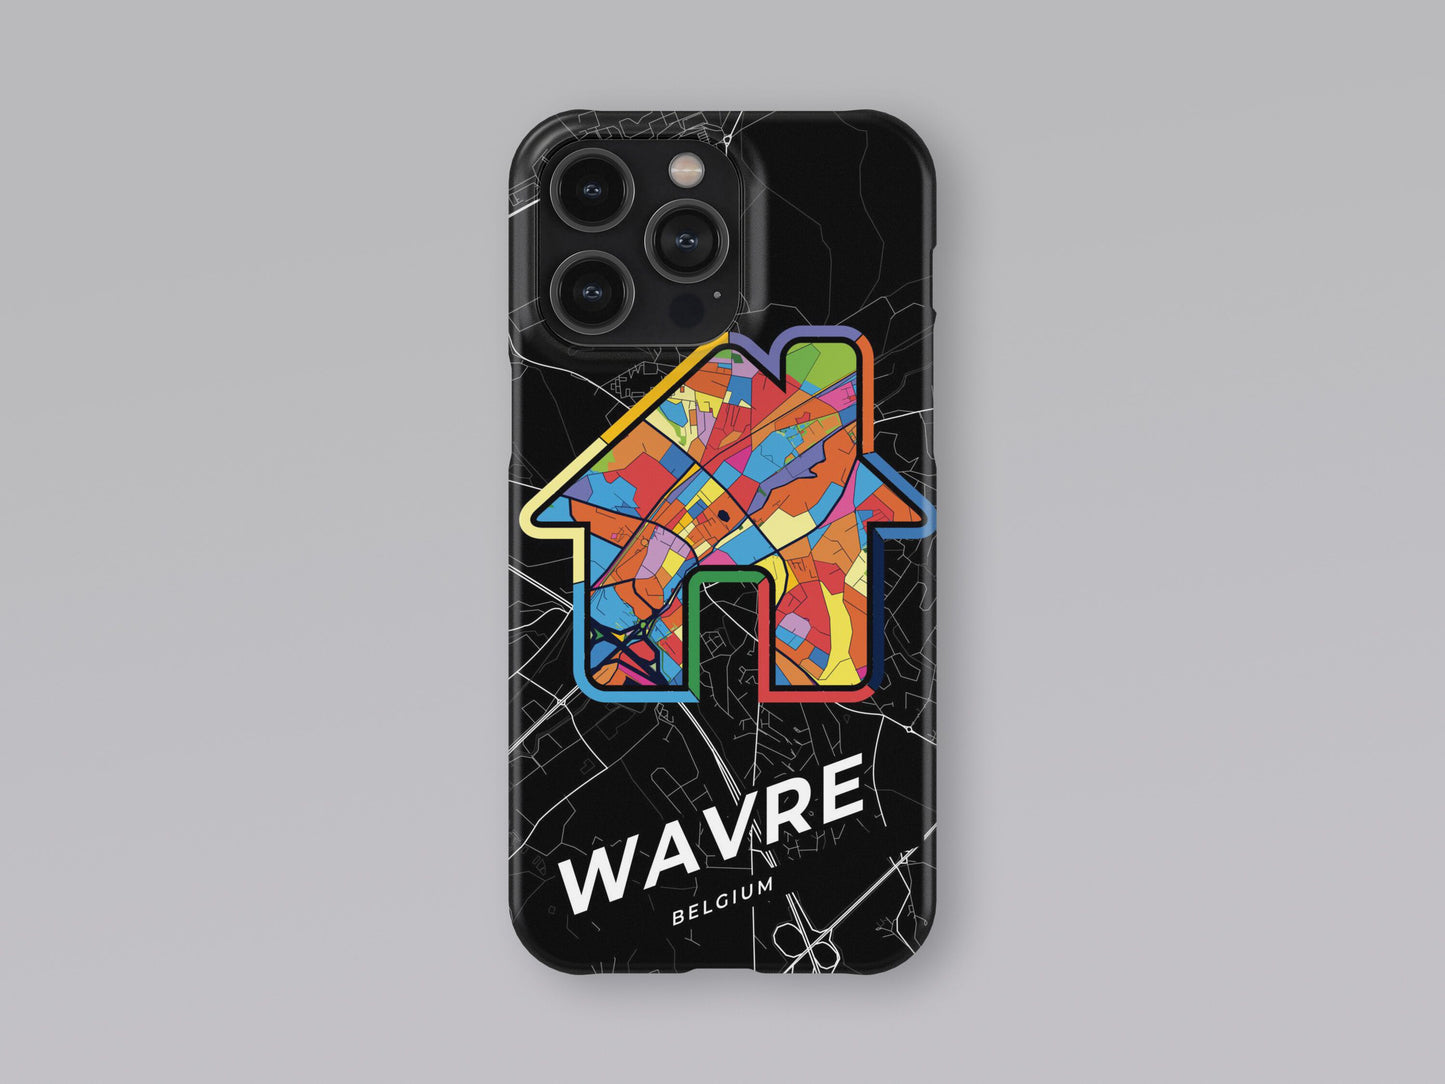 Wavre Belgium slim phone case with colorful icon 3